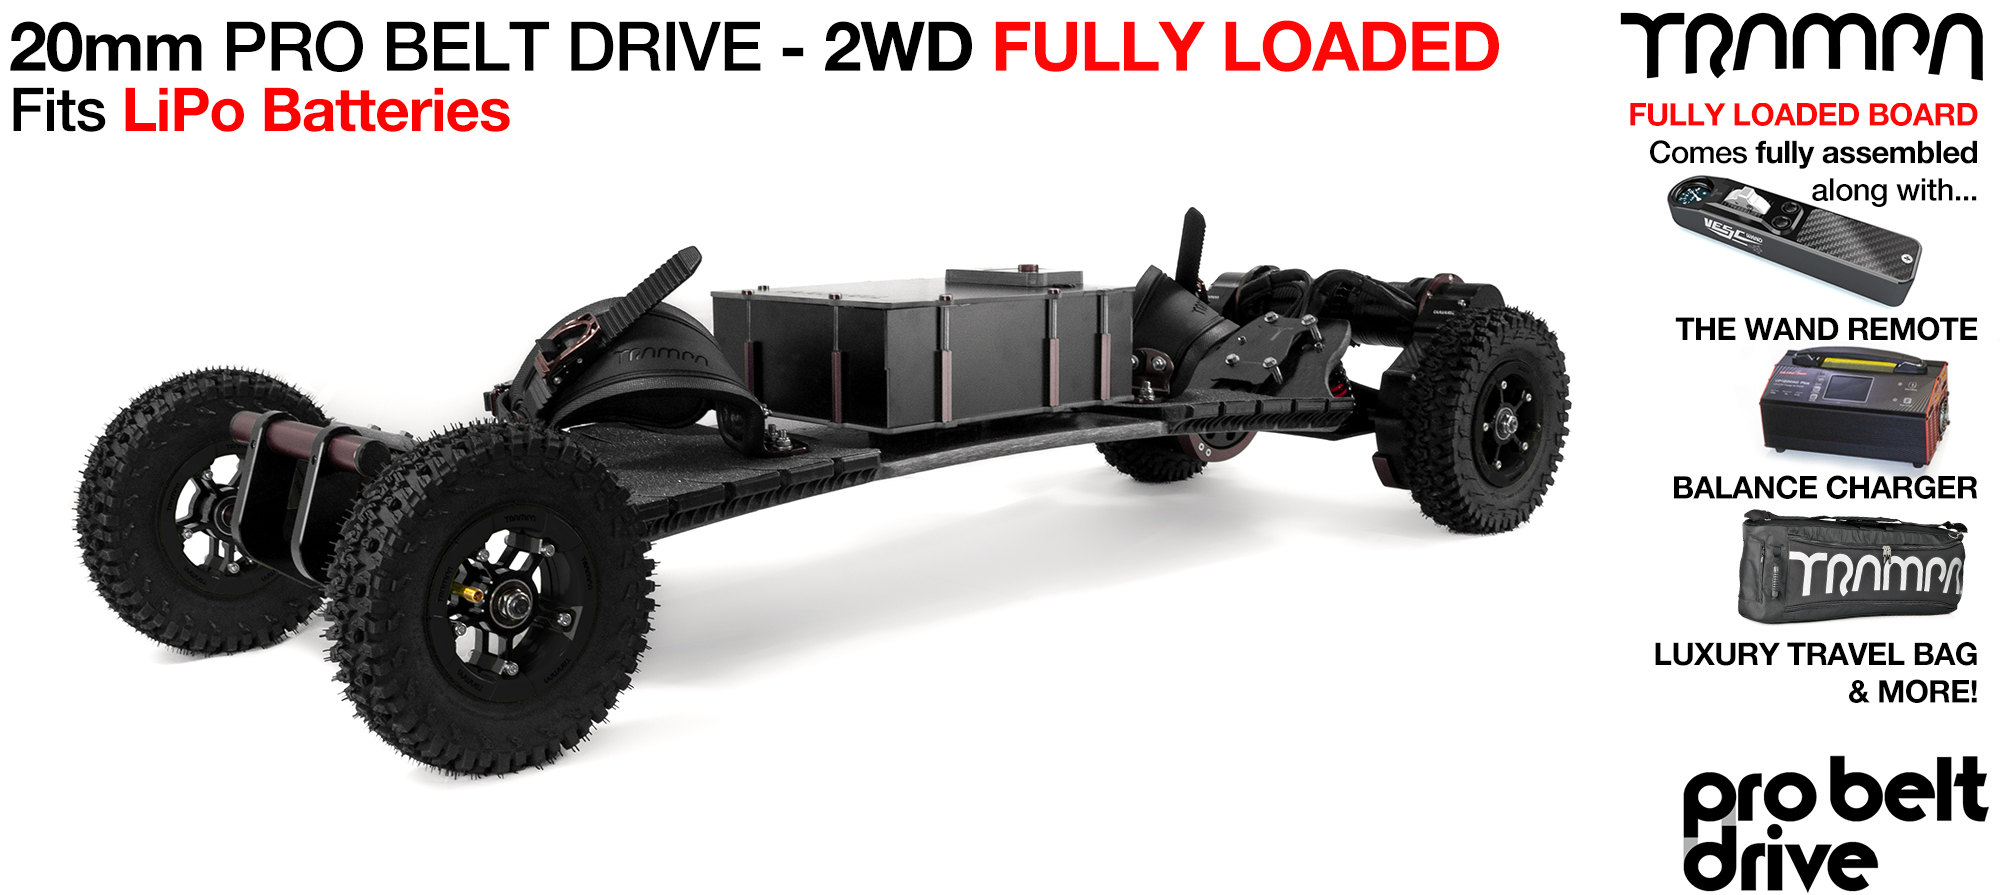 2WD 20mm PRO BELT DRIVE E-MTB - LOADED for Li-Po Cells  (£2,000)